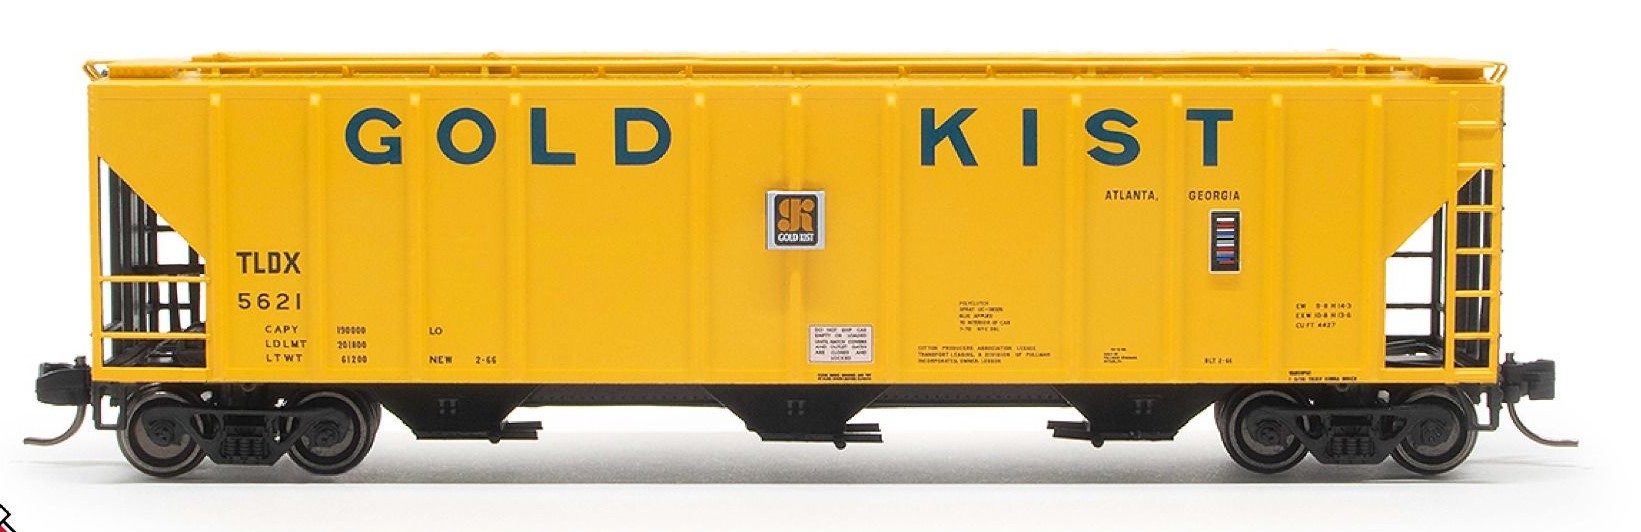 ExactRail N 53023-2 Pullman-Standard 4427 Covered Hopper Gold Kist '1970 Repaint' TLDX #5621